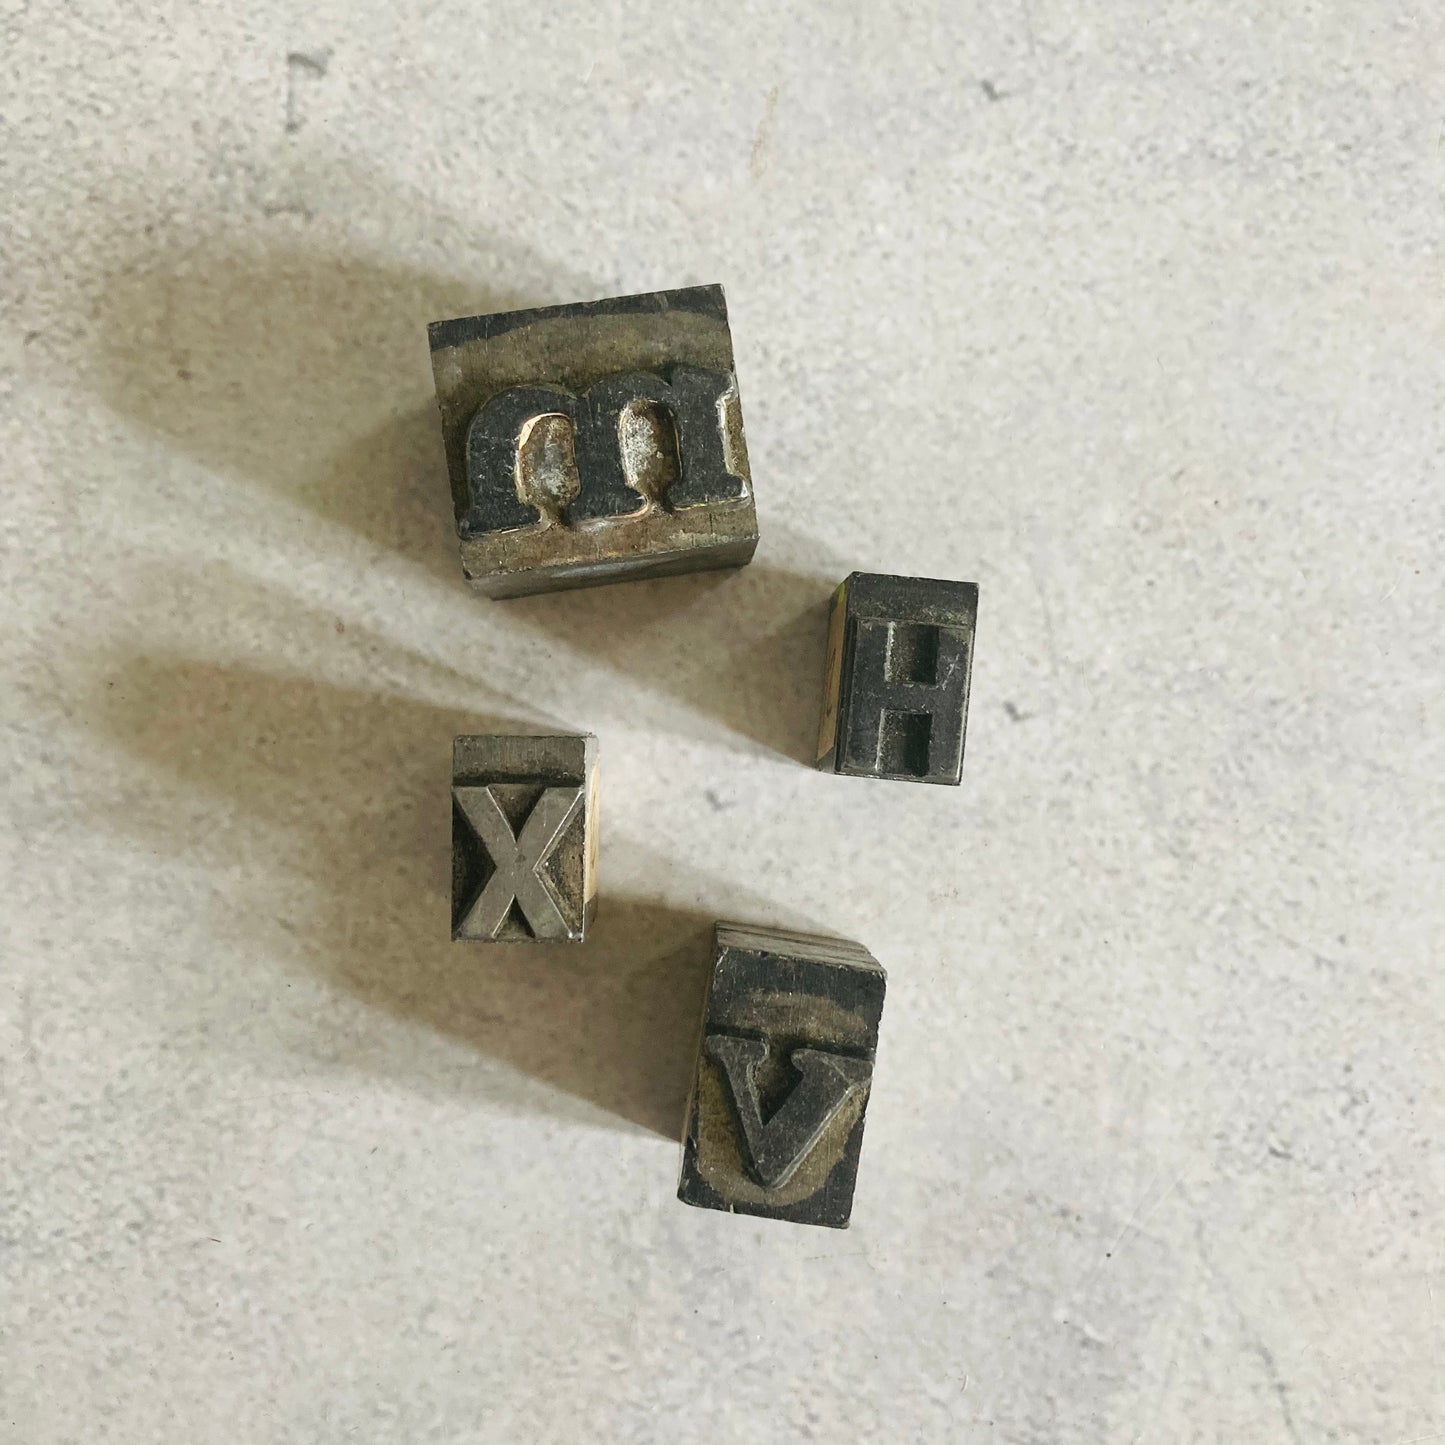 Vintage Printing Typeset Letter Blocks